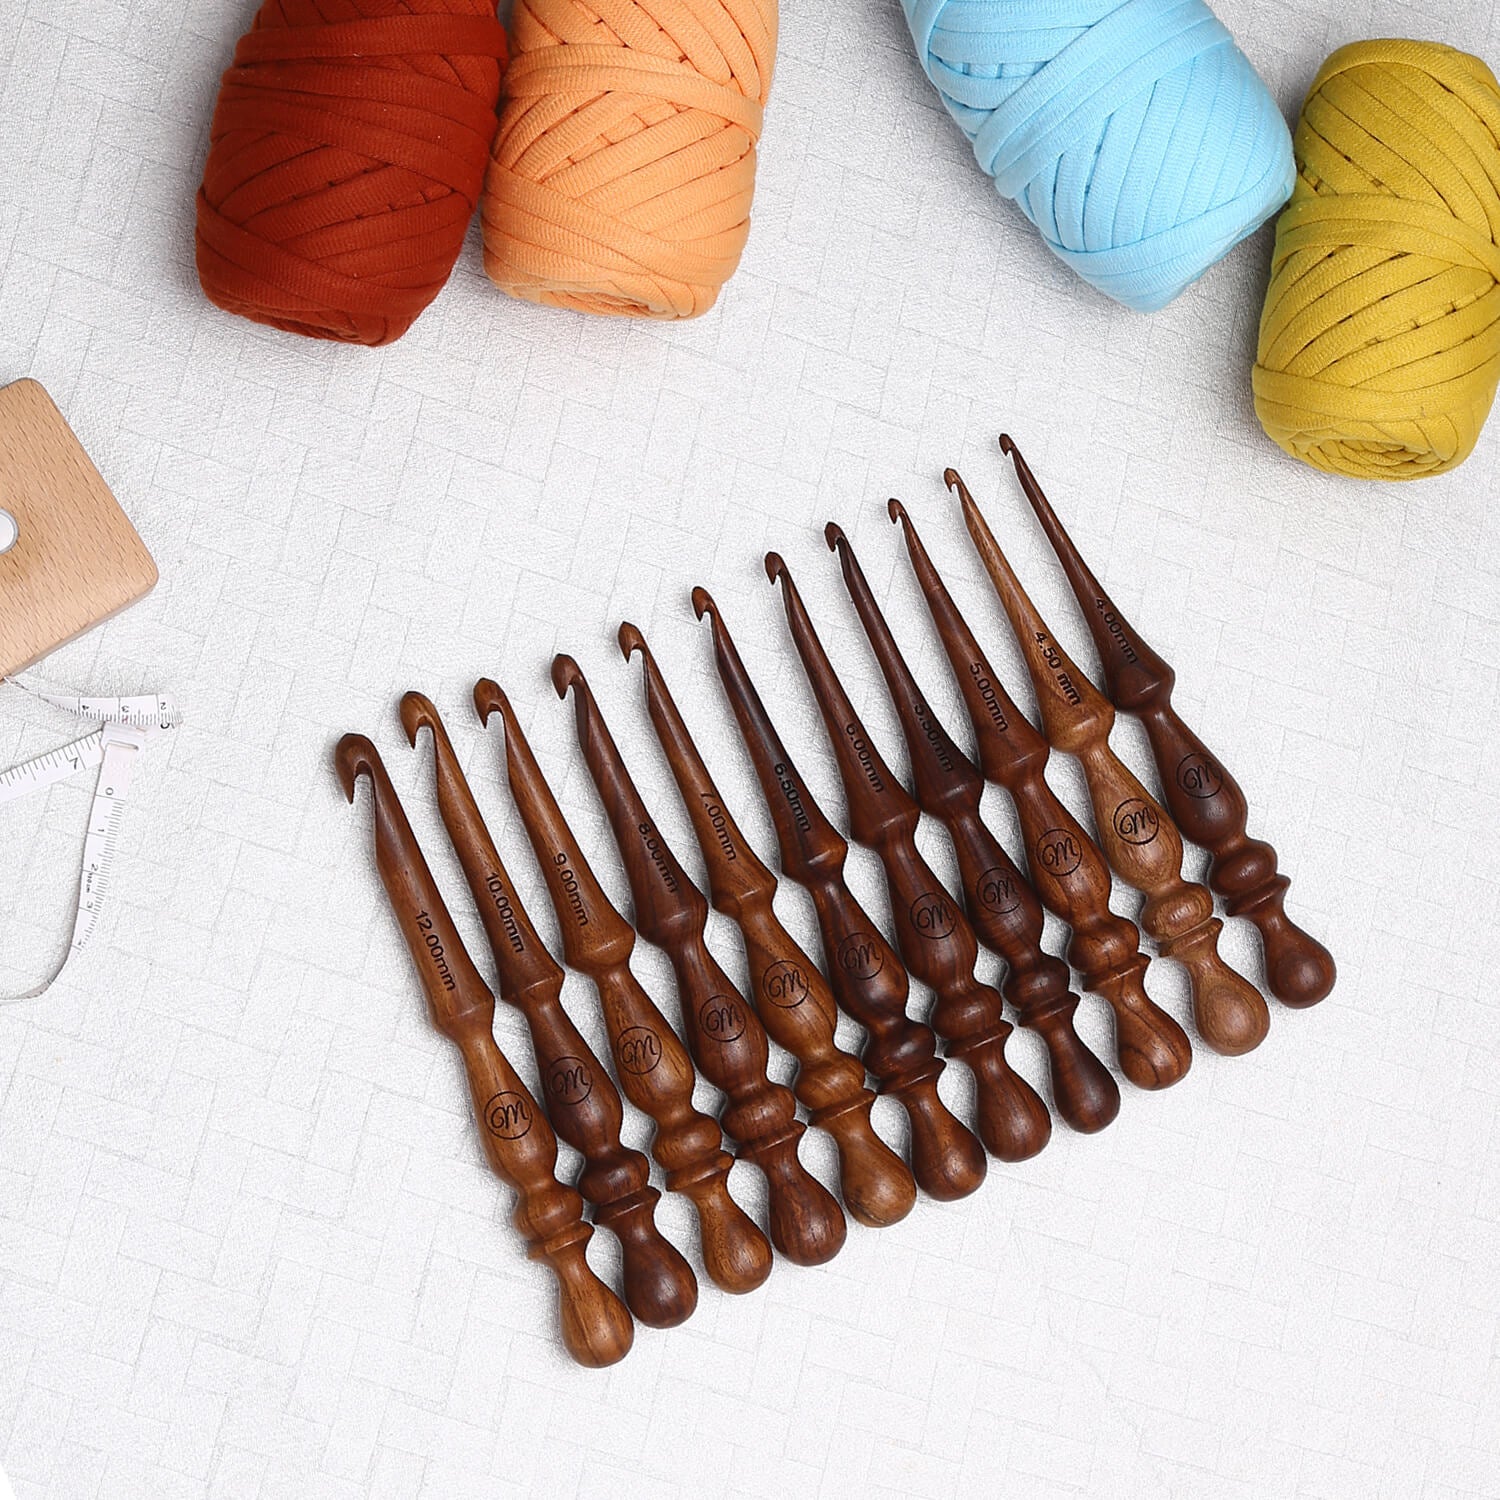 4.5mm Crochet Hook KnitPro Waves - AMAZING CRAFT